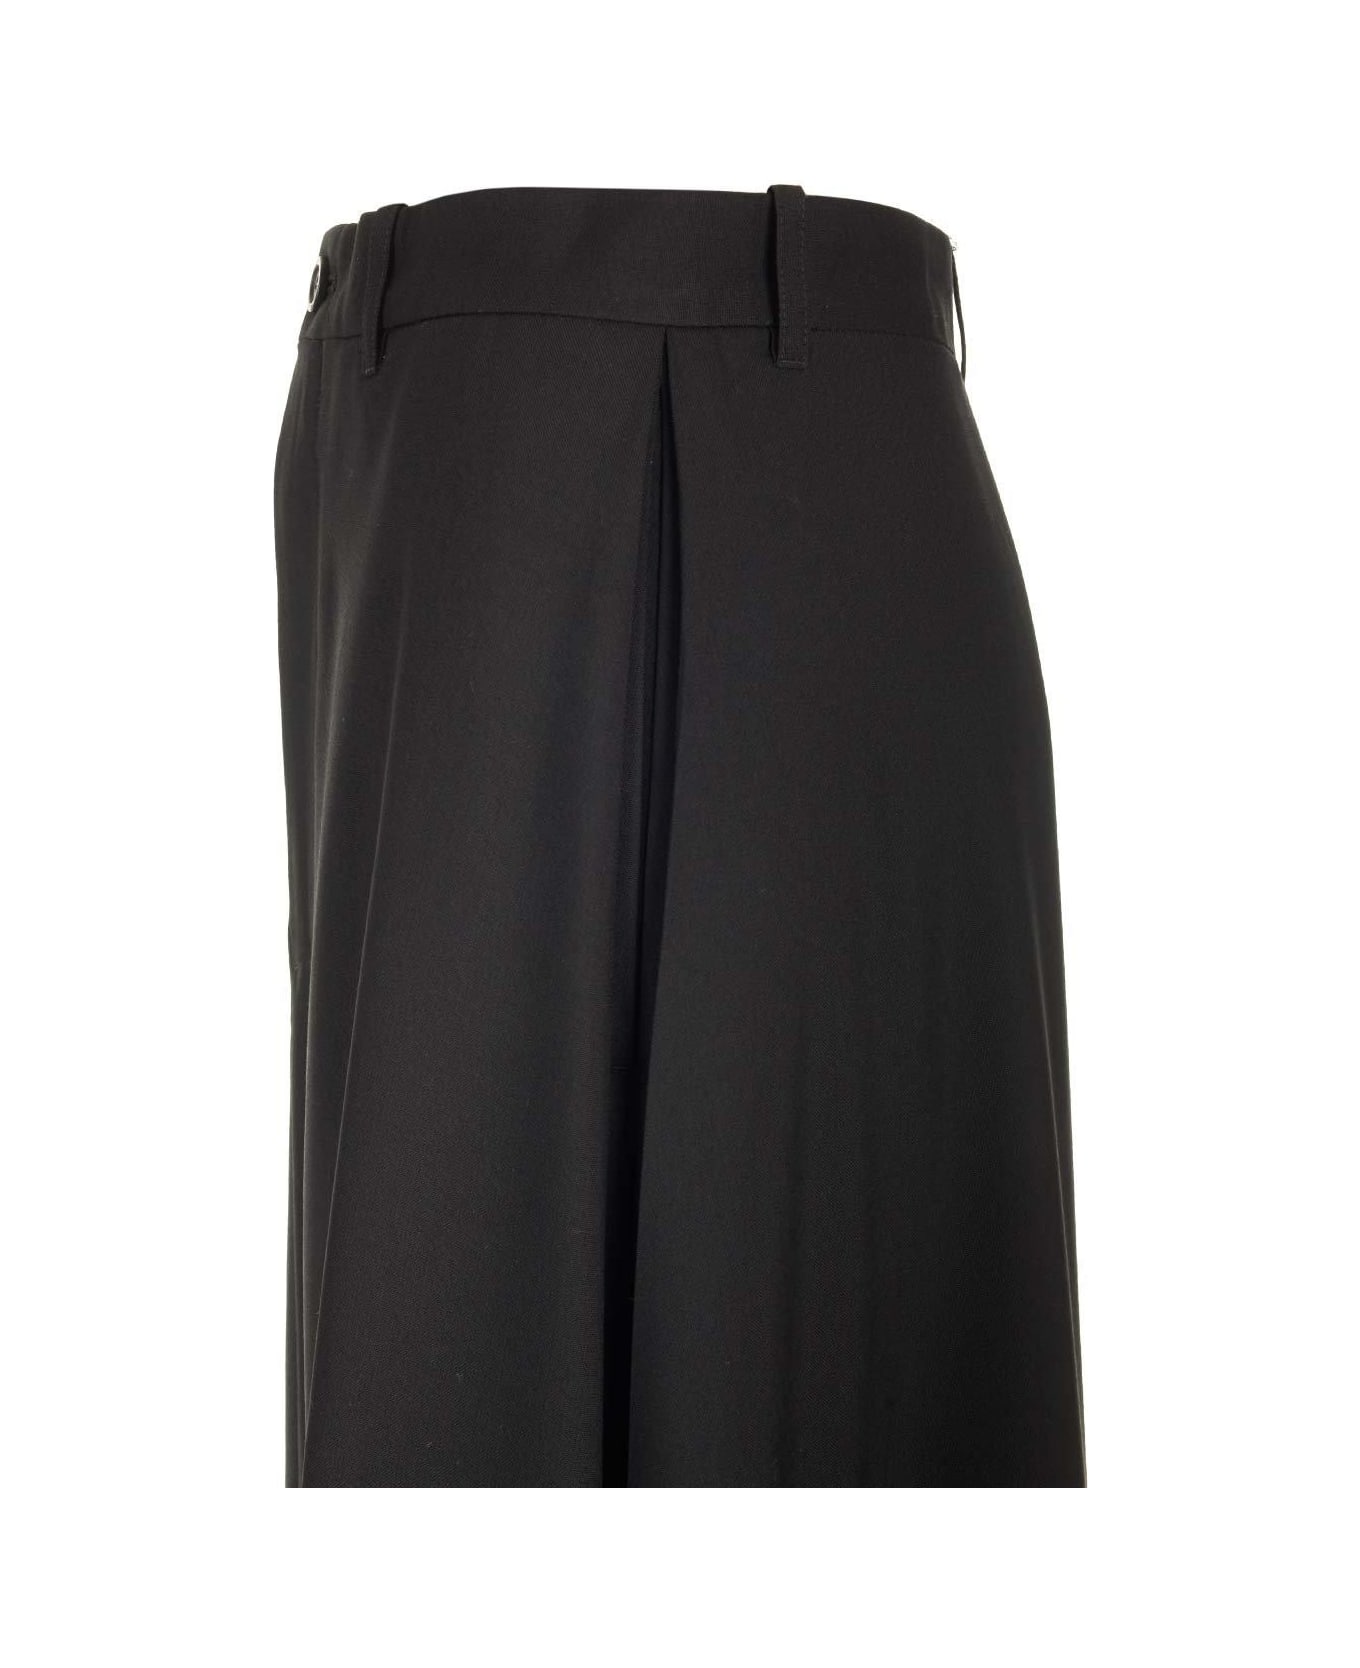 Balenciaga Flared Maxi Skirt スカート